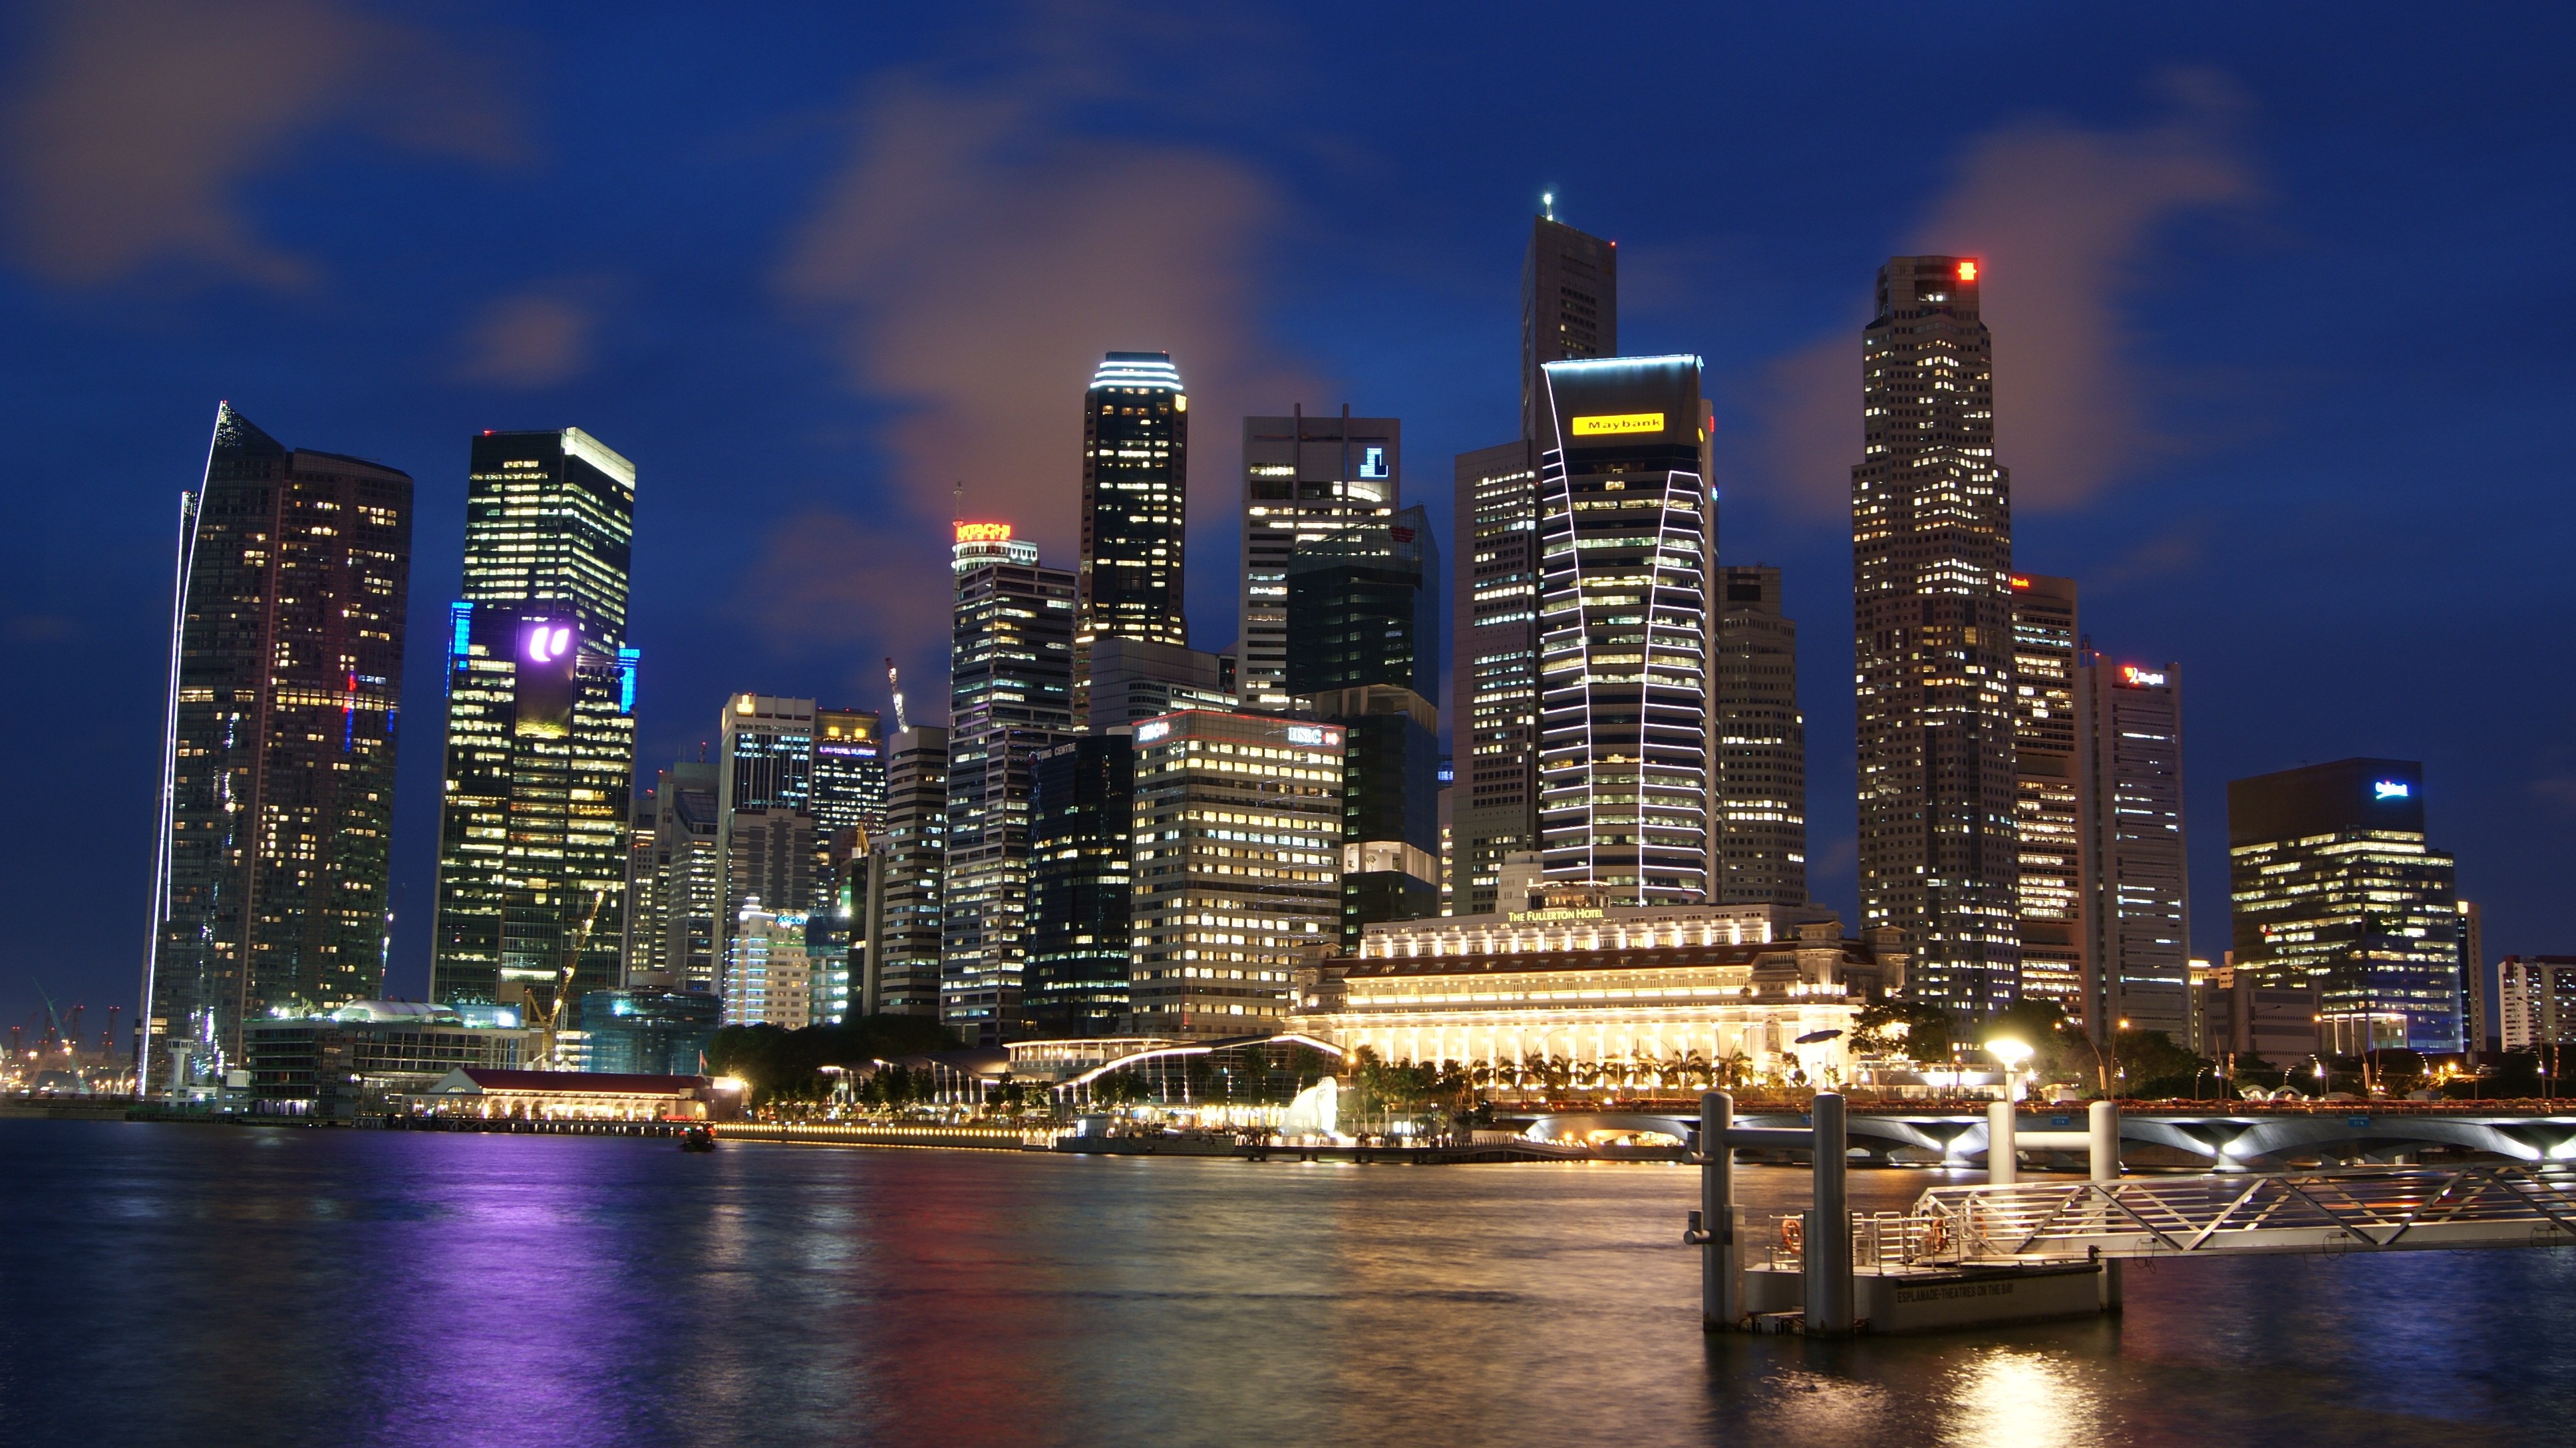 File:Singapore Skyline at Night with Blue Sky.JPG - Wikimedia Commons